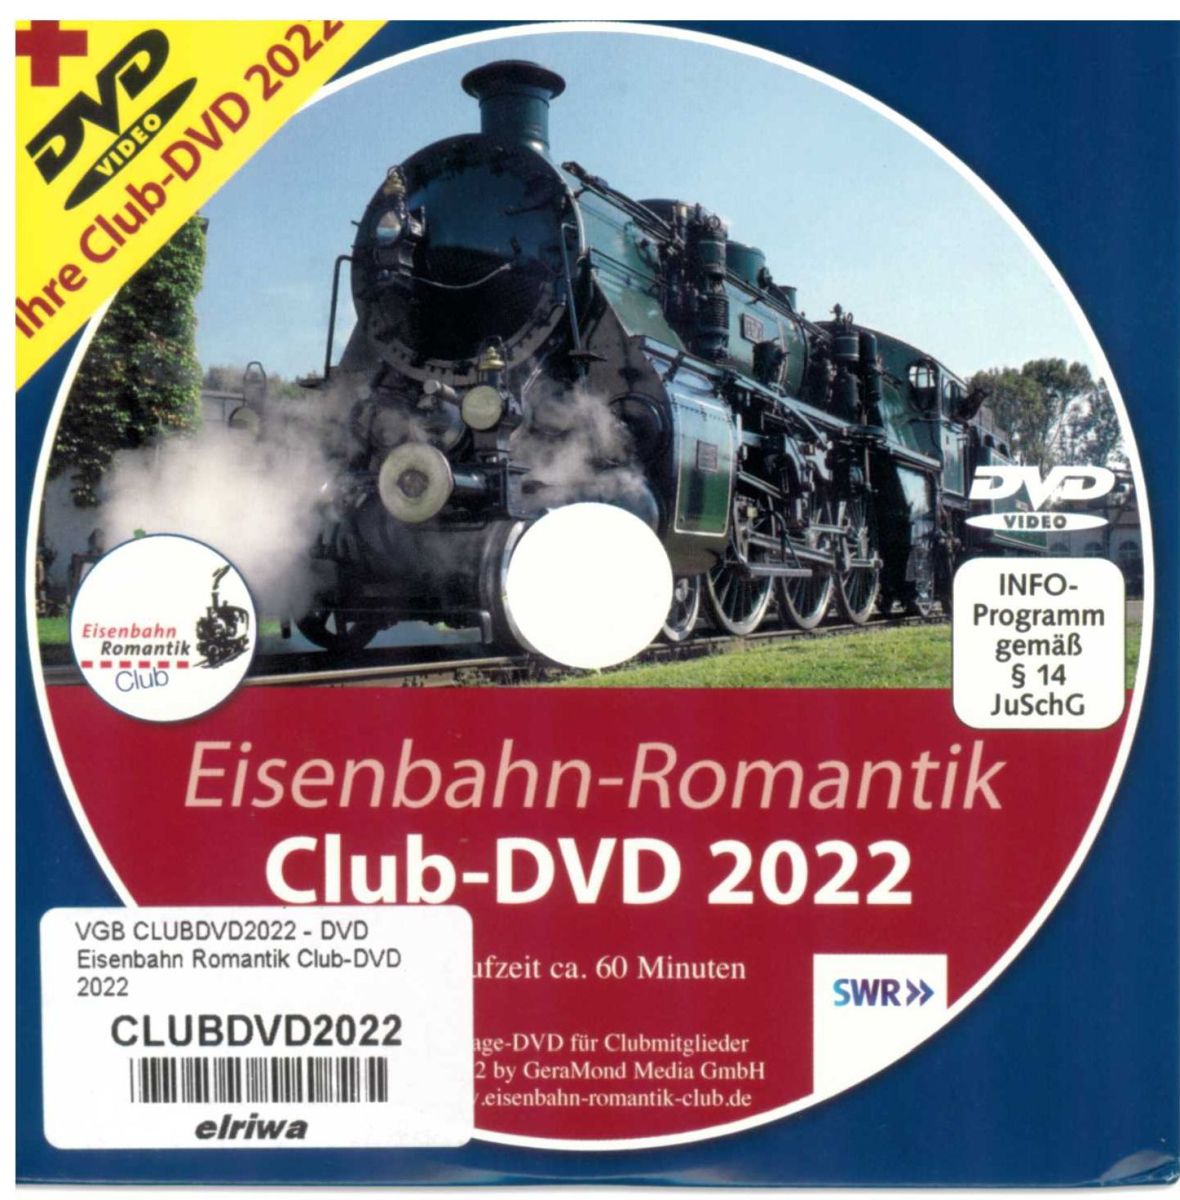 VGB CLUBDVD -2022 - DVD - Eisenbahn Romantik Club-DVD - 2022